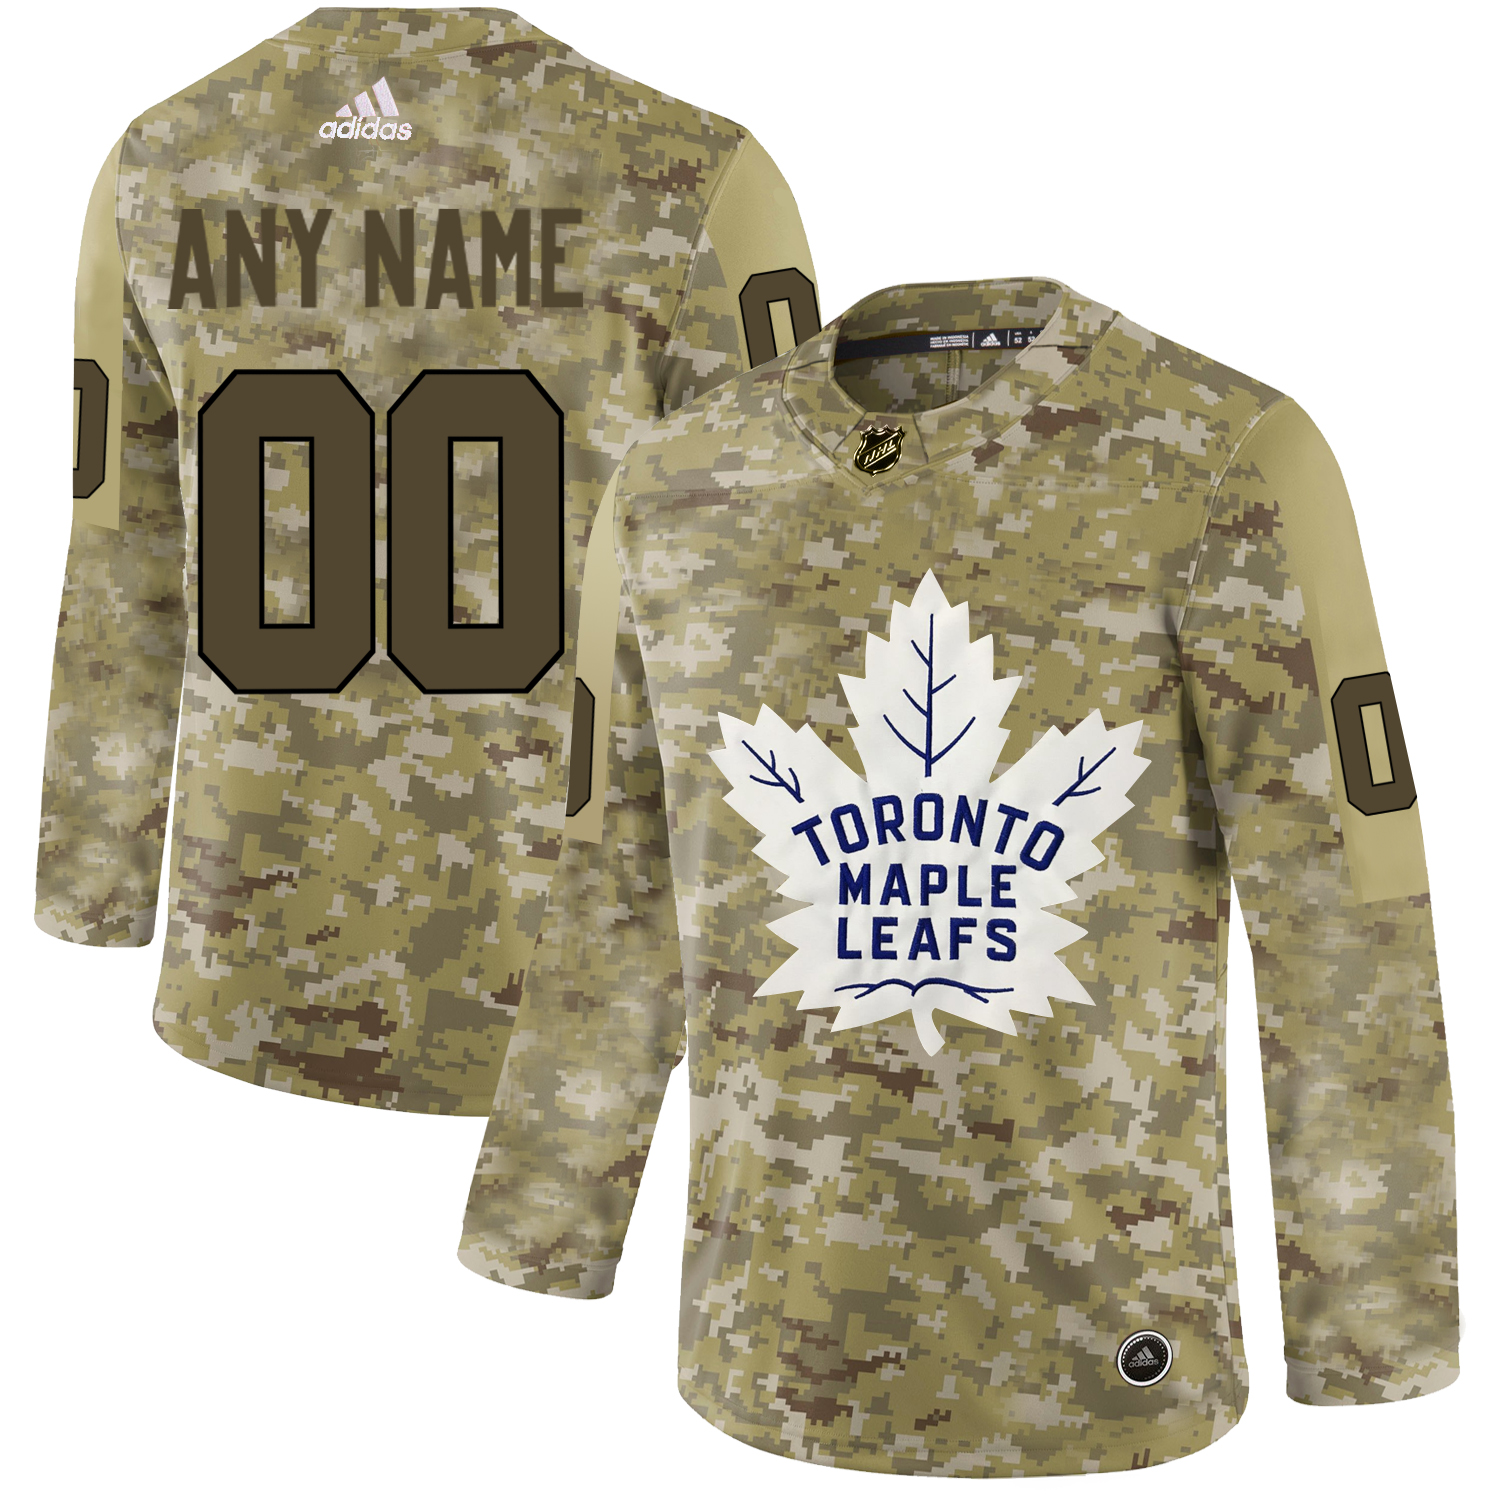 Toronto Maple Leafs Camo Men's Customized Adidas Jersey